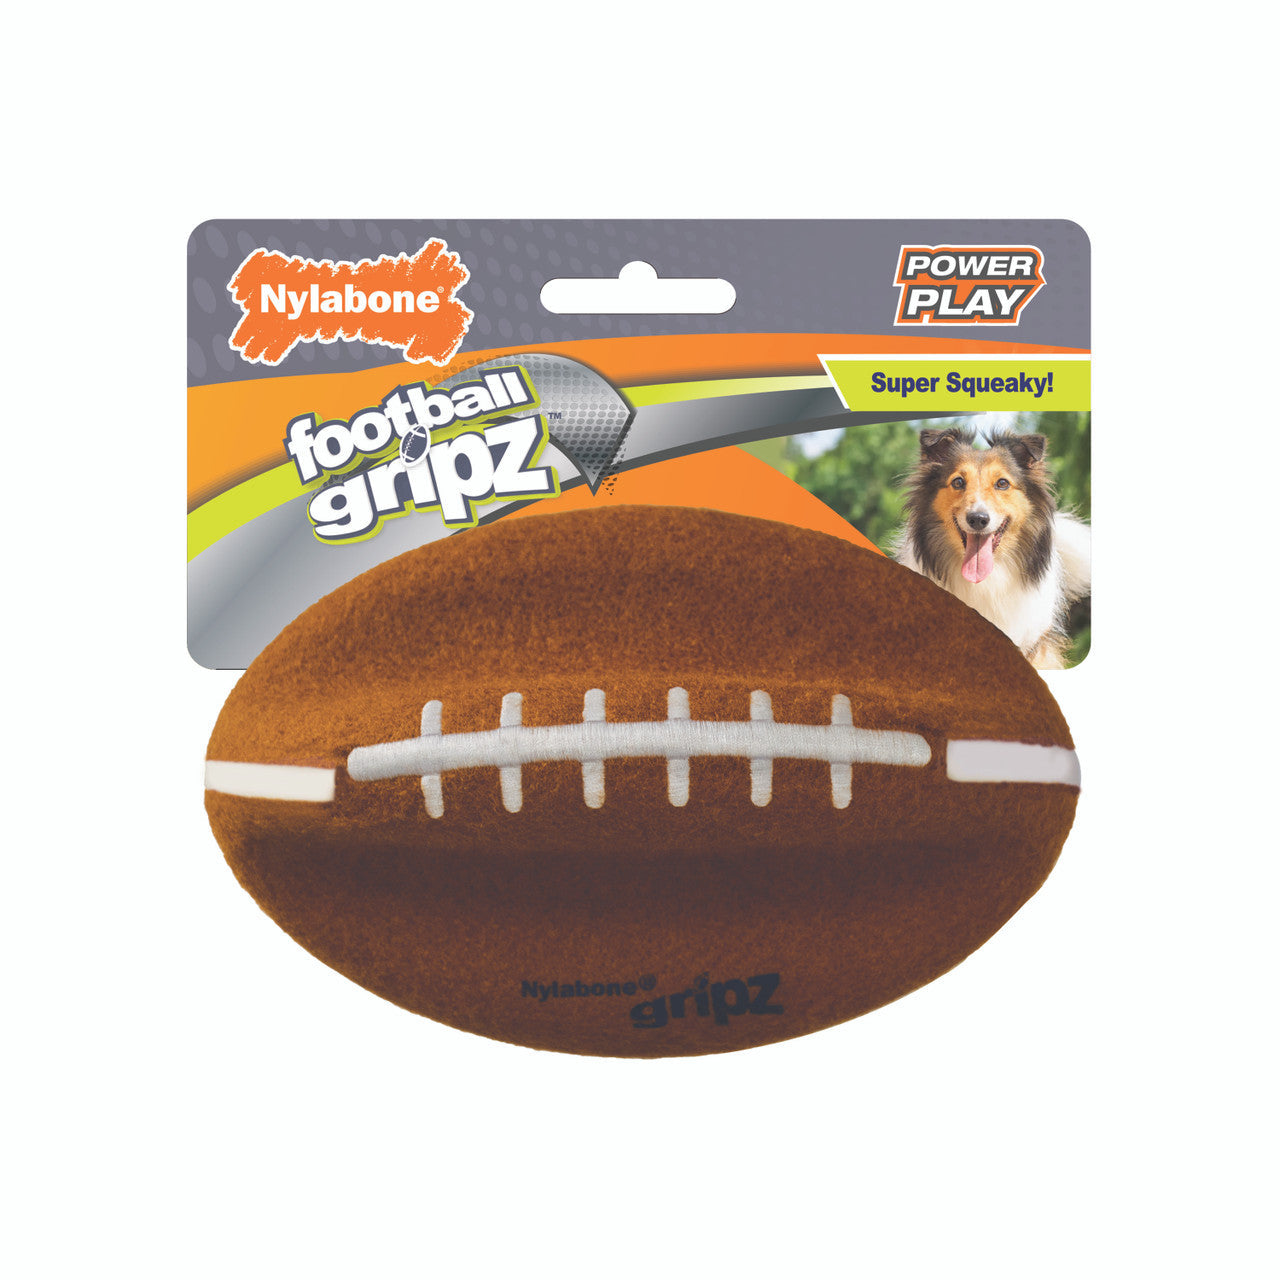 Nylabone Power Play Dog Football Gripz Medium (1 Count)